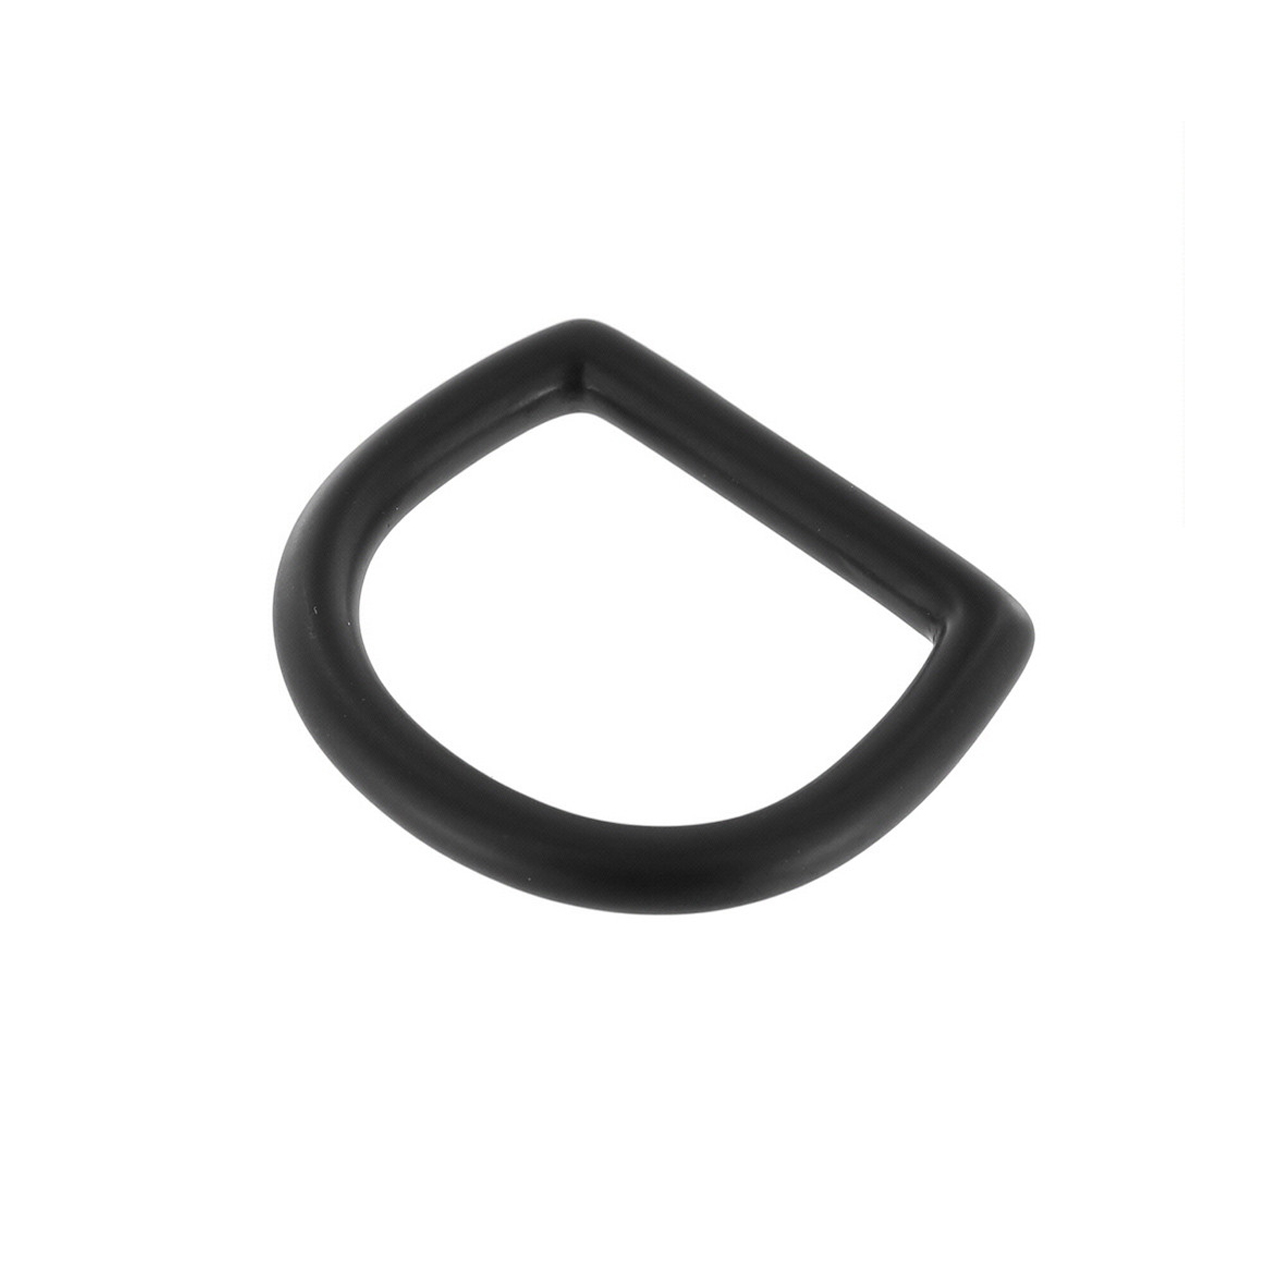 10ga 1/2 ID Solid Engineered Plastic Rings - Black (Bulk bag of